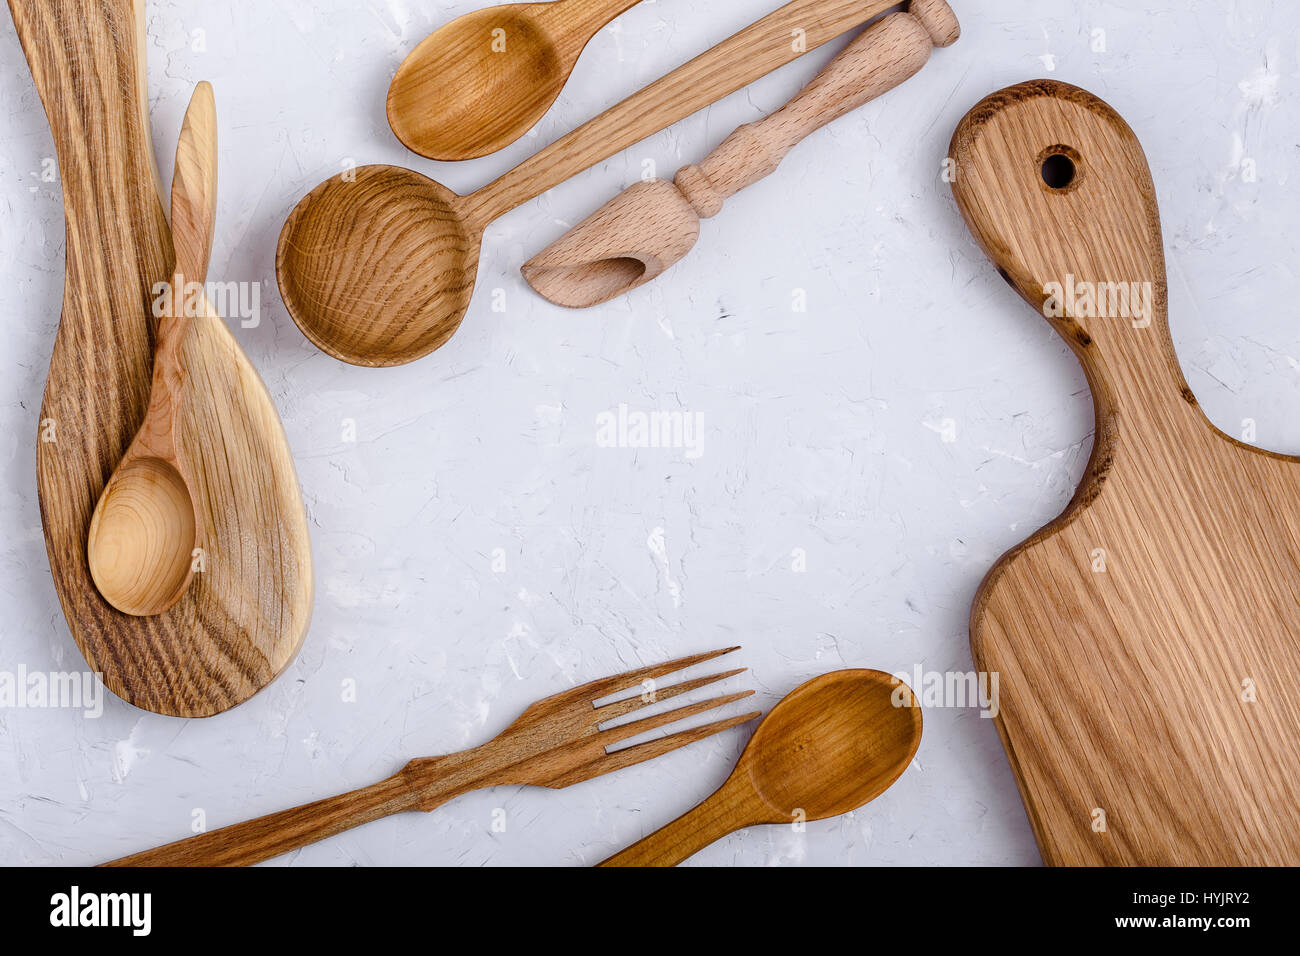 Border of wooden kitchen necessities Stock Photo by ©oocoskun 68950631